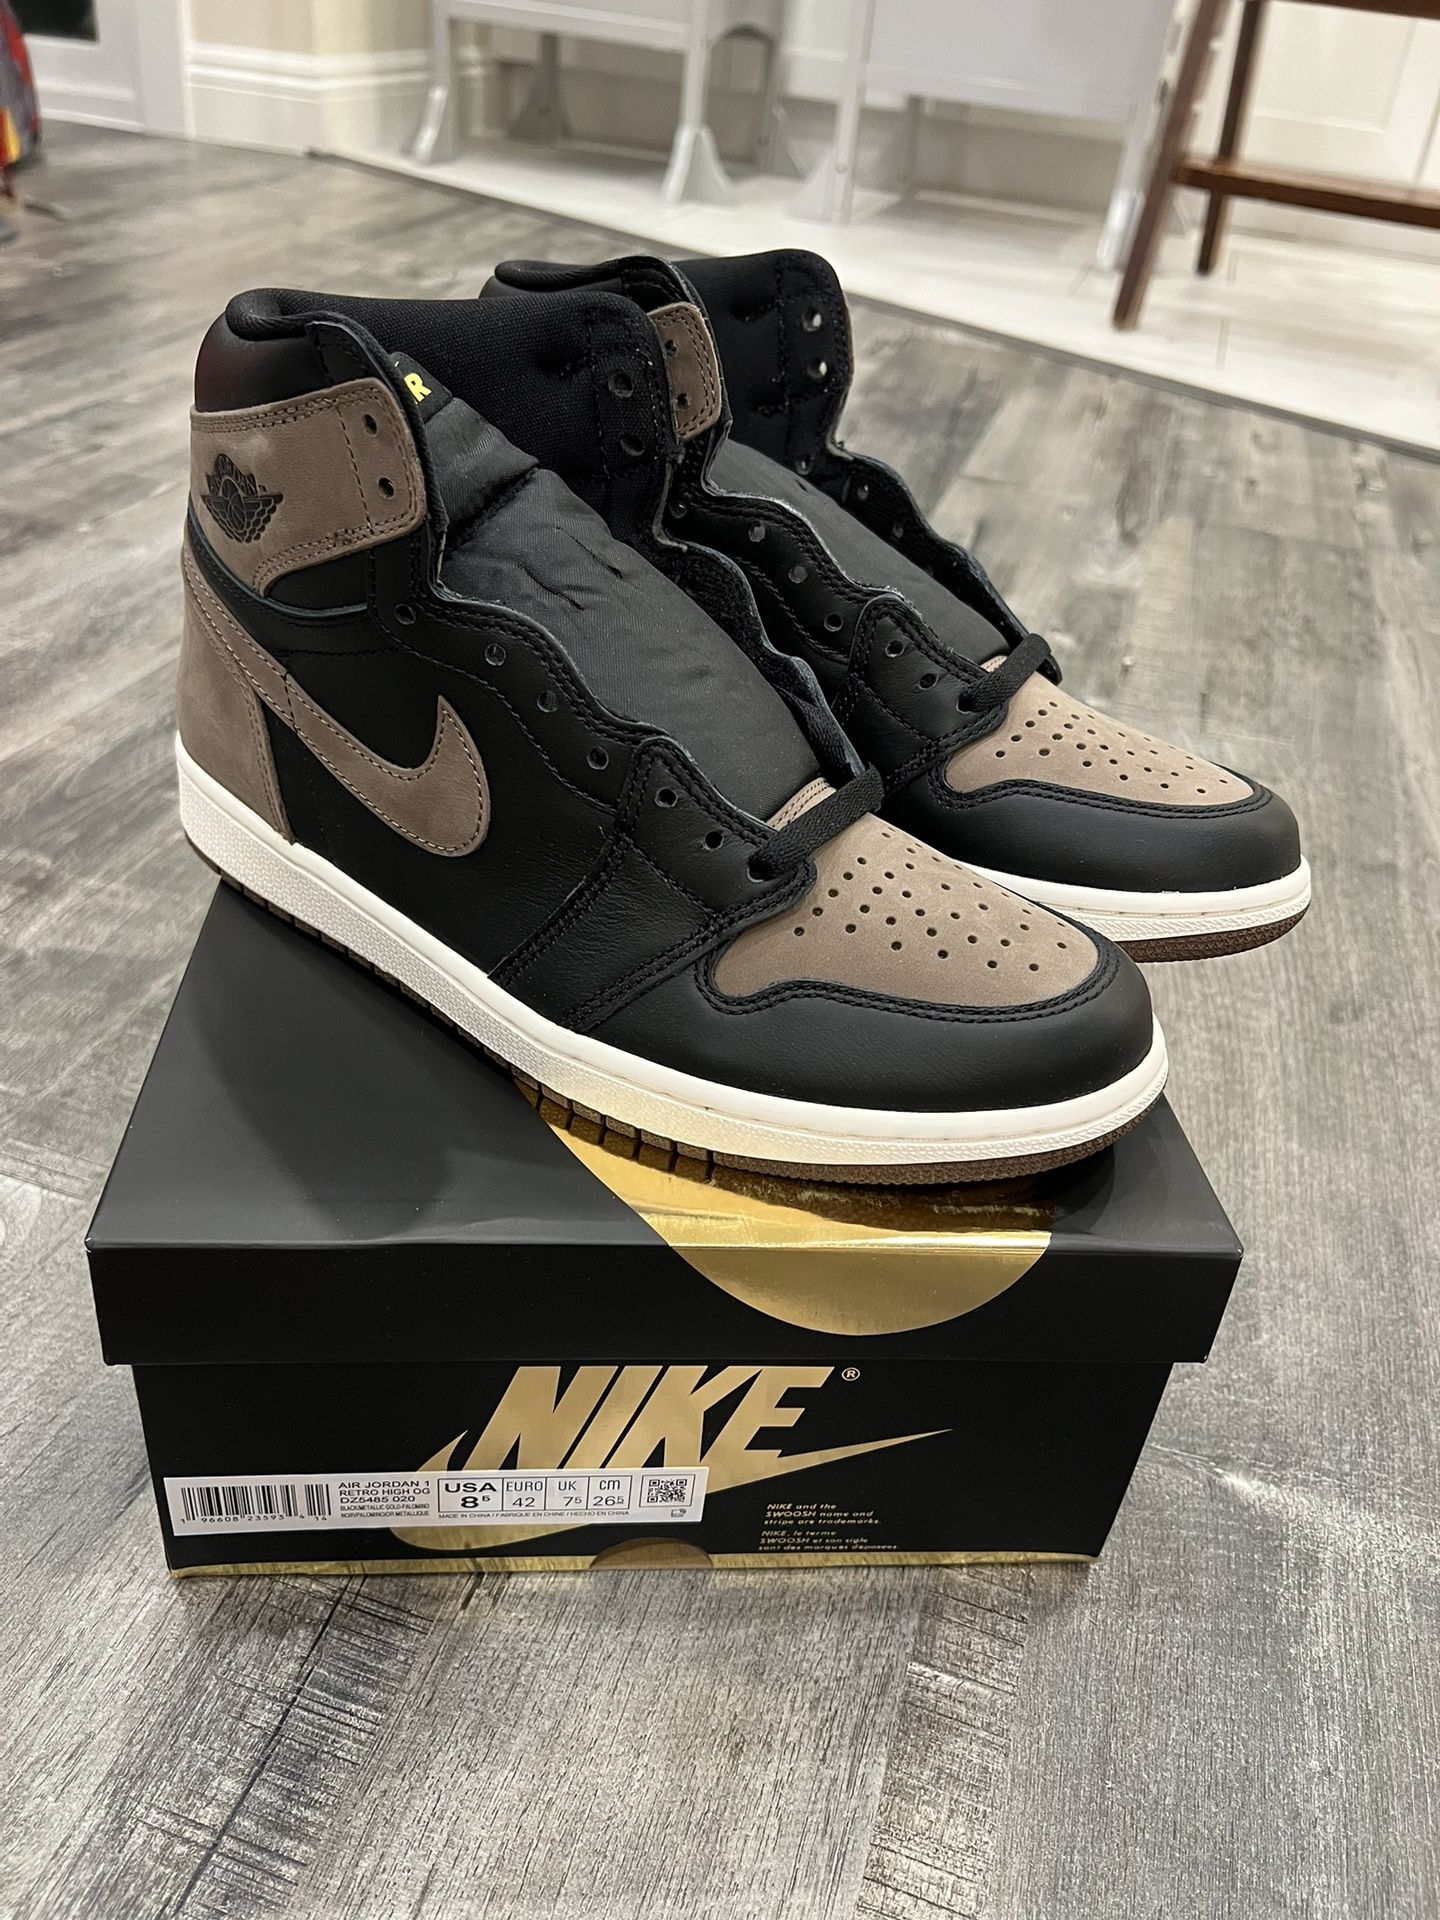 ( Size 8.5 ) Nike Air Jordan 1 High OG, Palomino